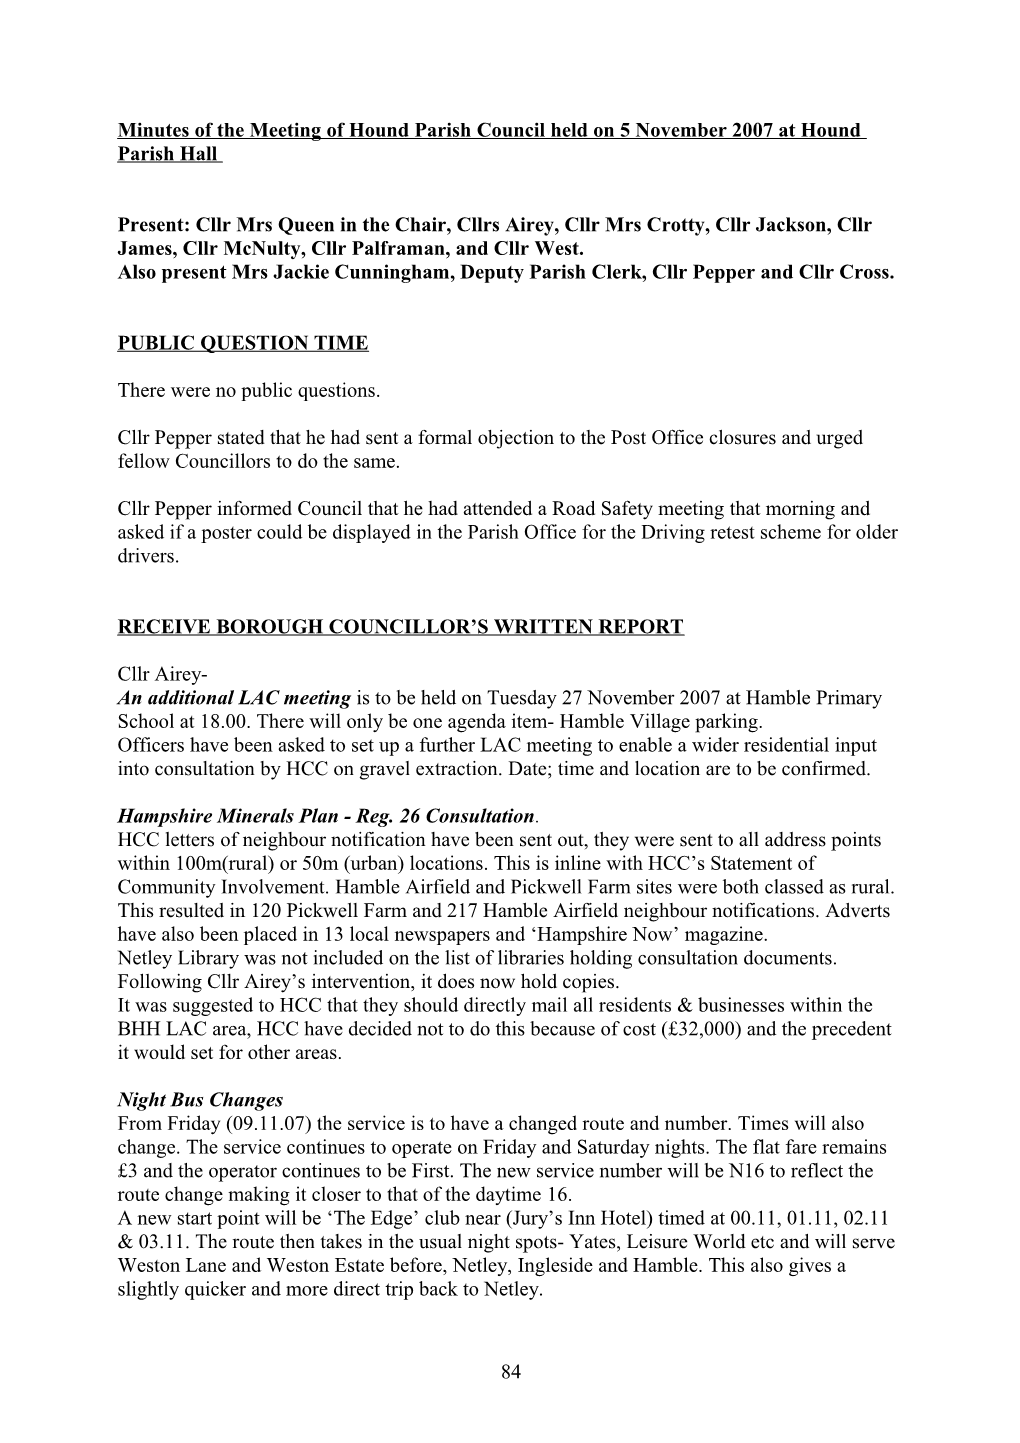 Minutes of the Meeting of Hound Parish Council Held on 5 November 2007 at Hound Parish Hall